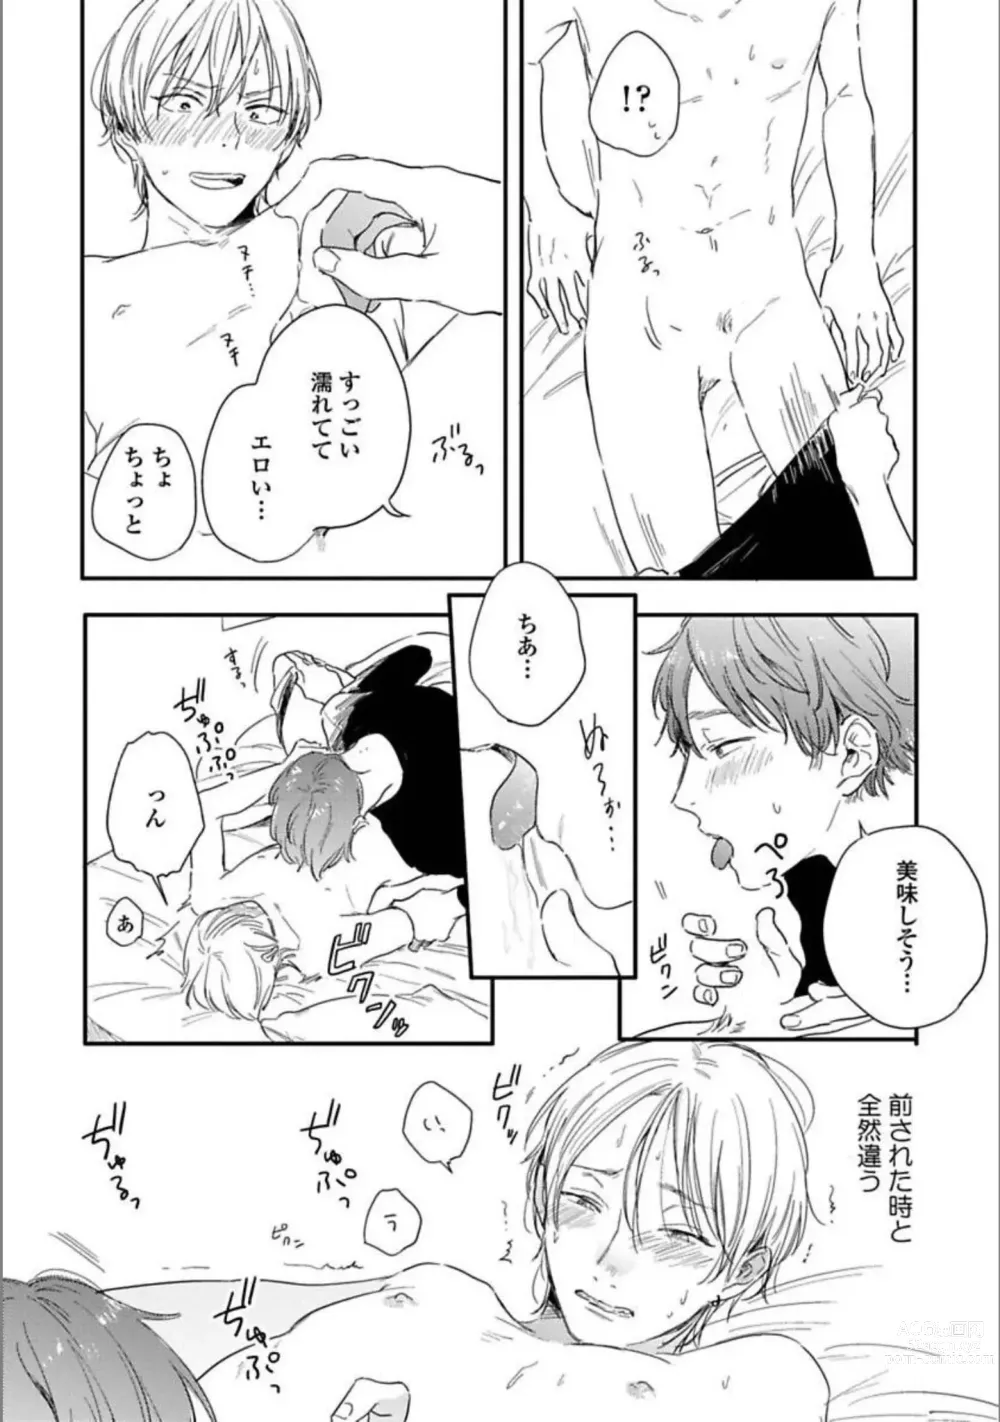 Page 194 of manga Itsuka Koi ni Naru Made Jou